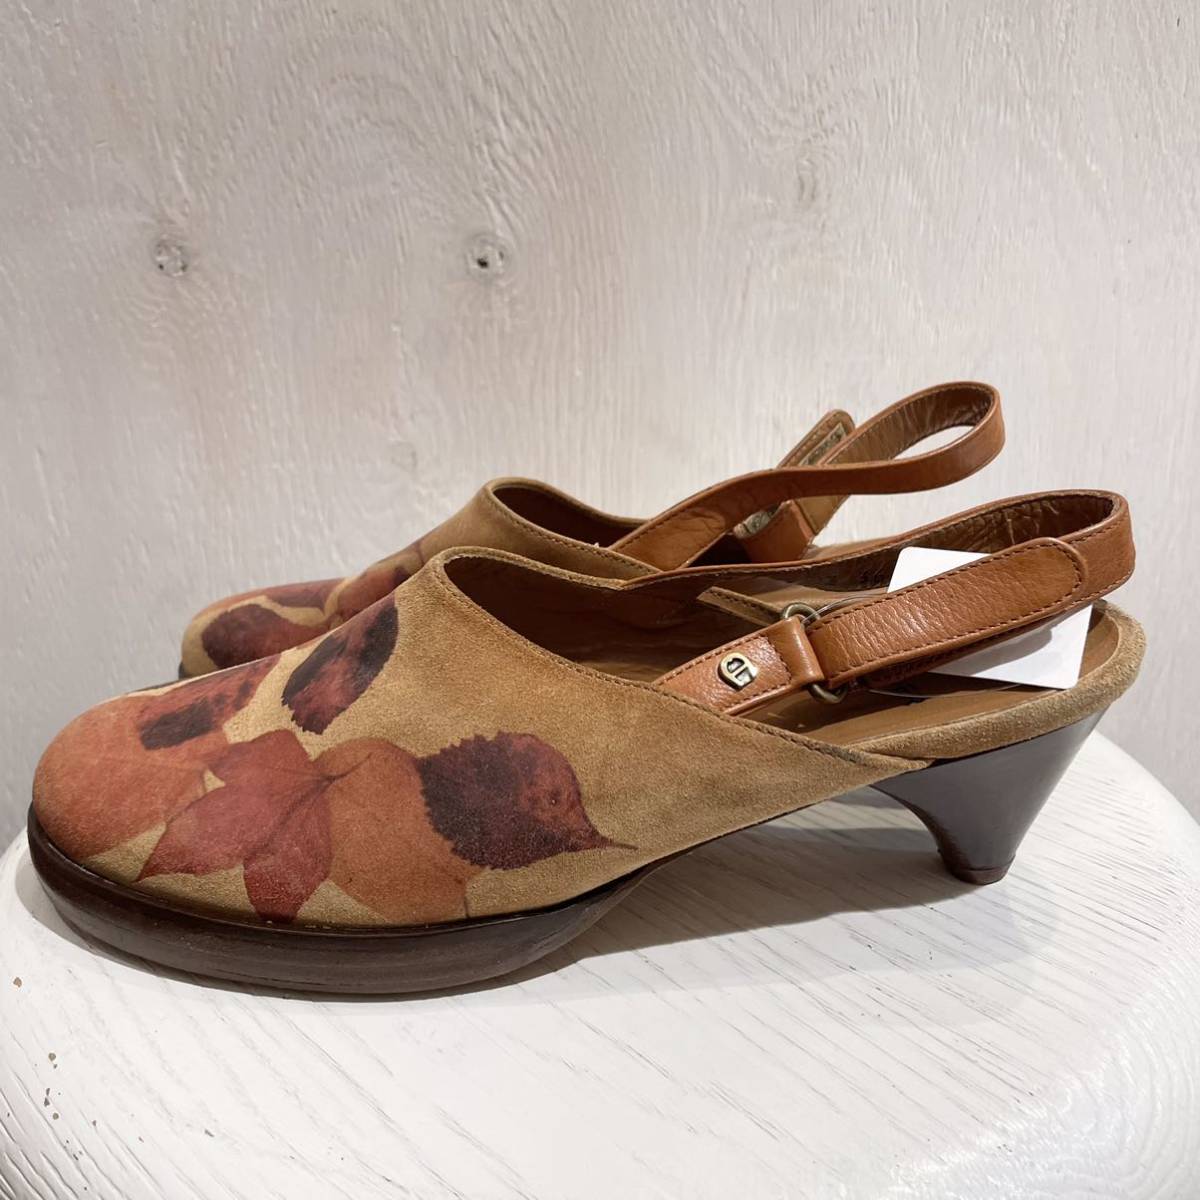 AIGNER/shoes/brown/heel/アイグナー/サボ/茶色/木の葉/スウェード/ヒール/靴_画像2